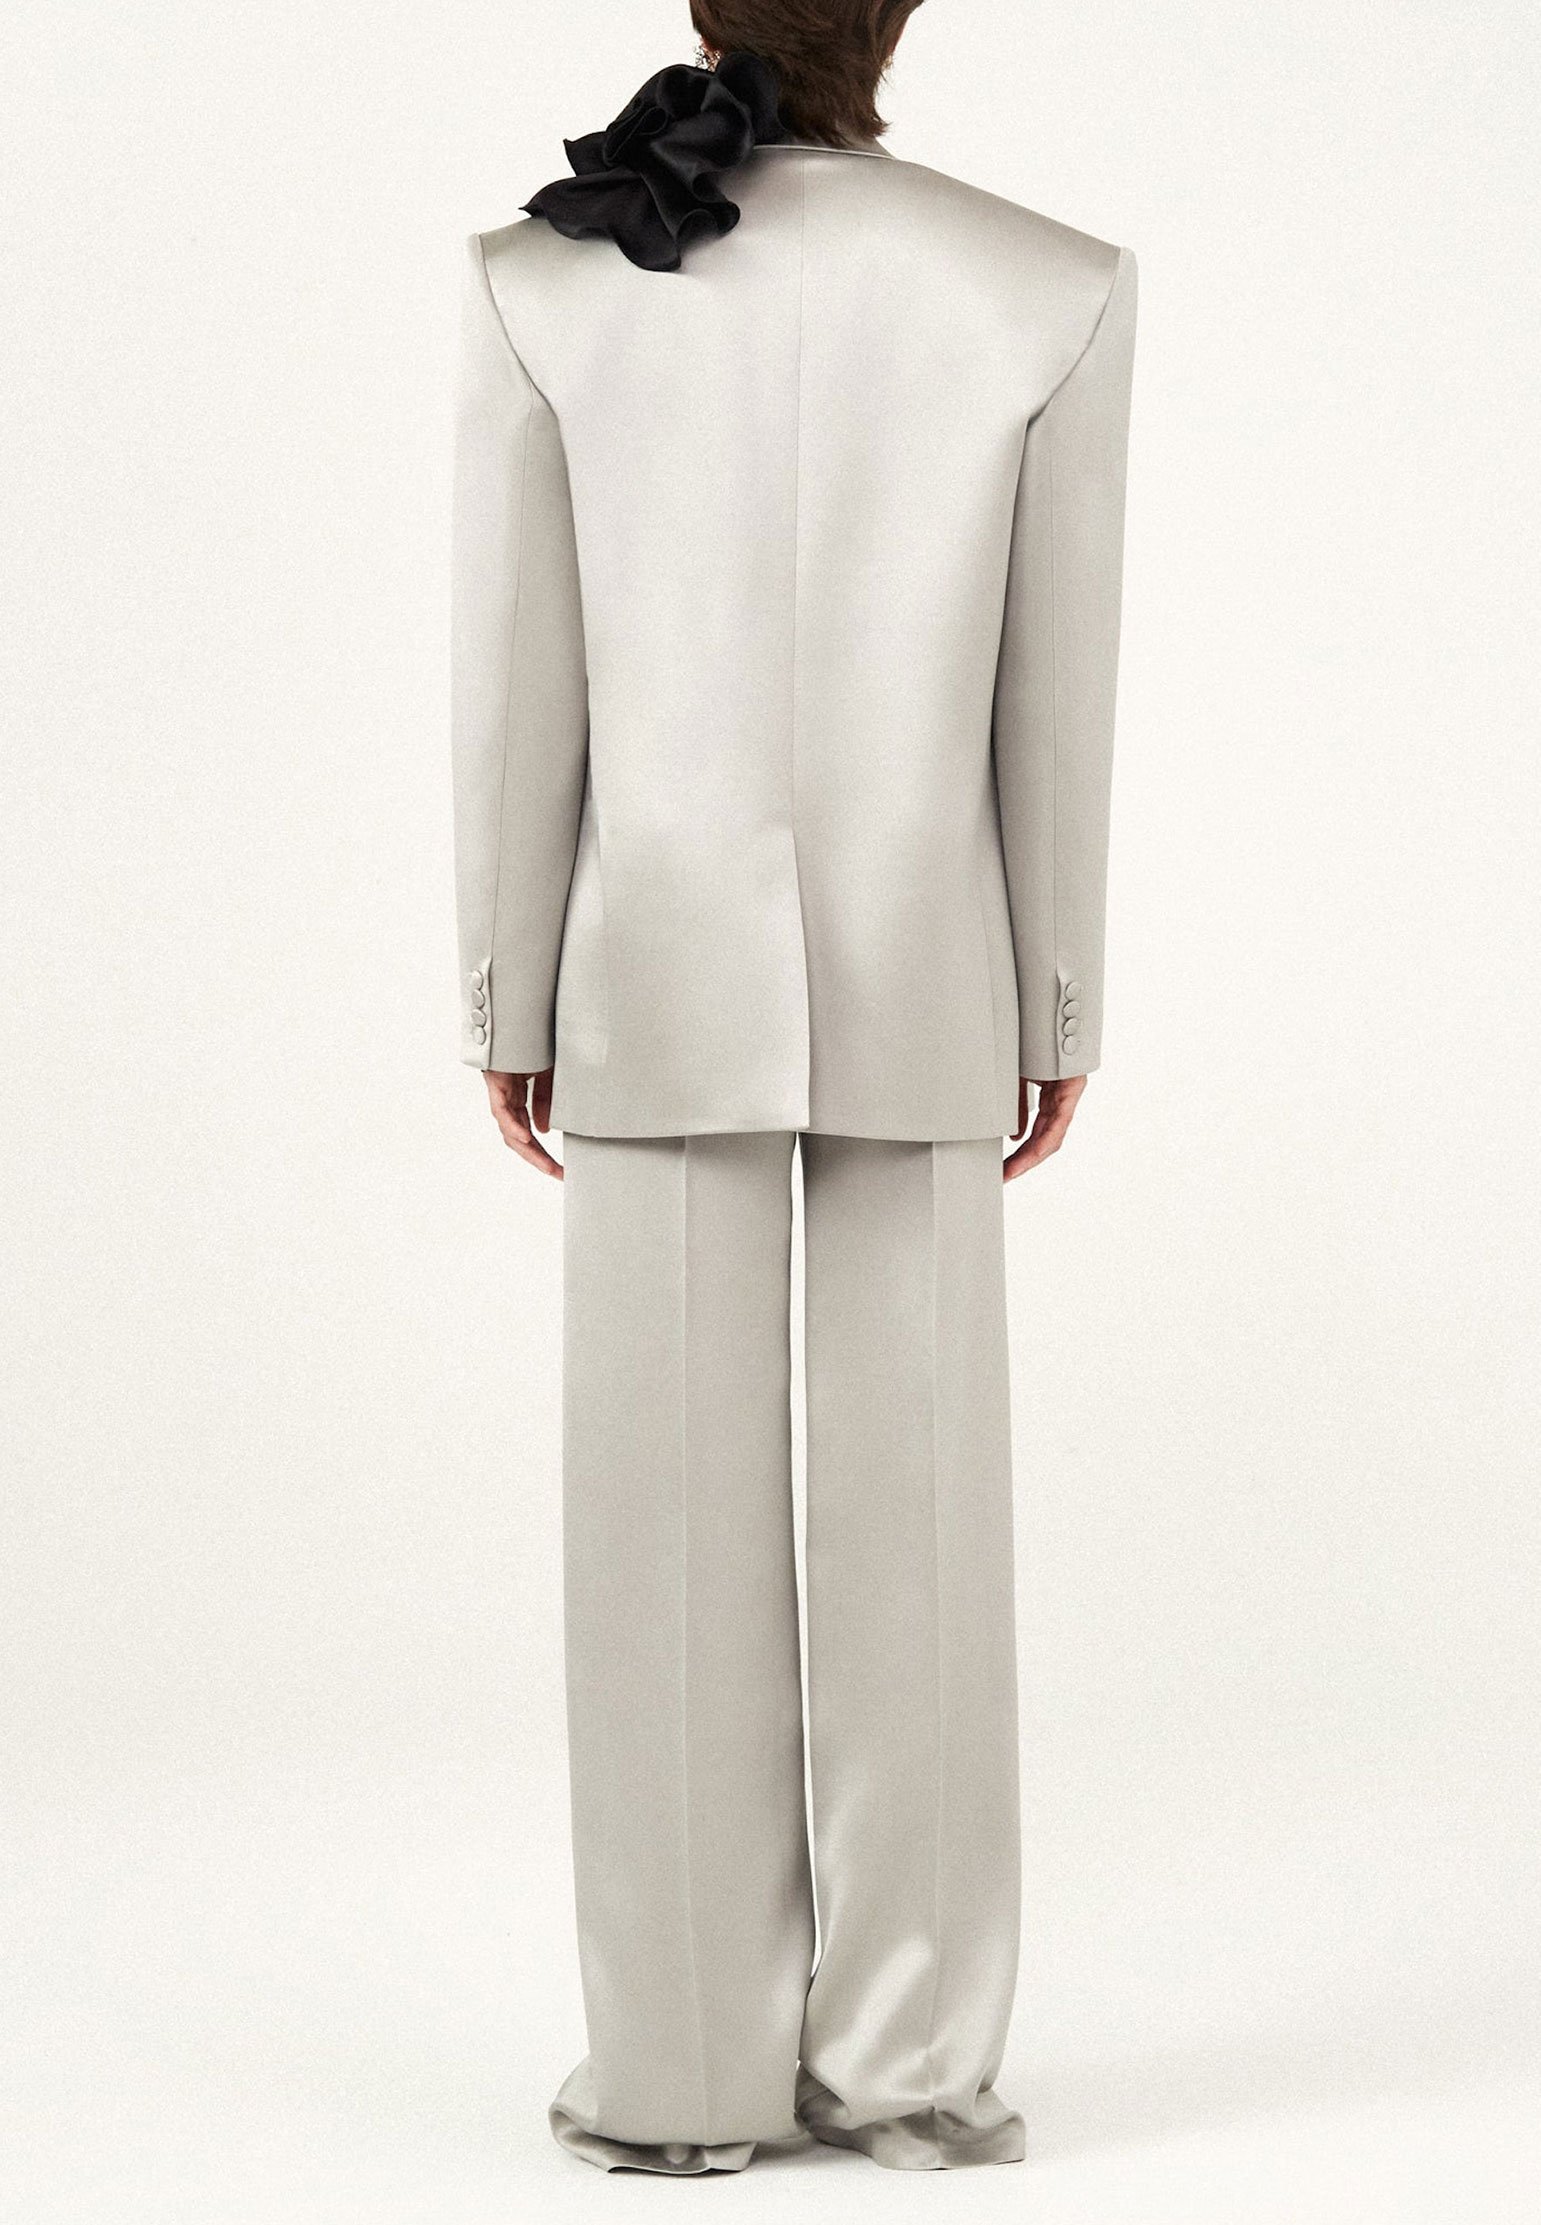 Jacket MAGDA BUTRYM Color: grey (Code: 2789) in online store Allure